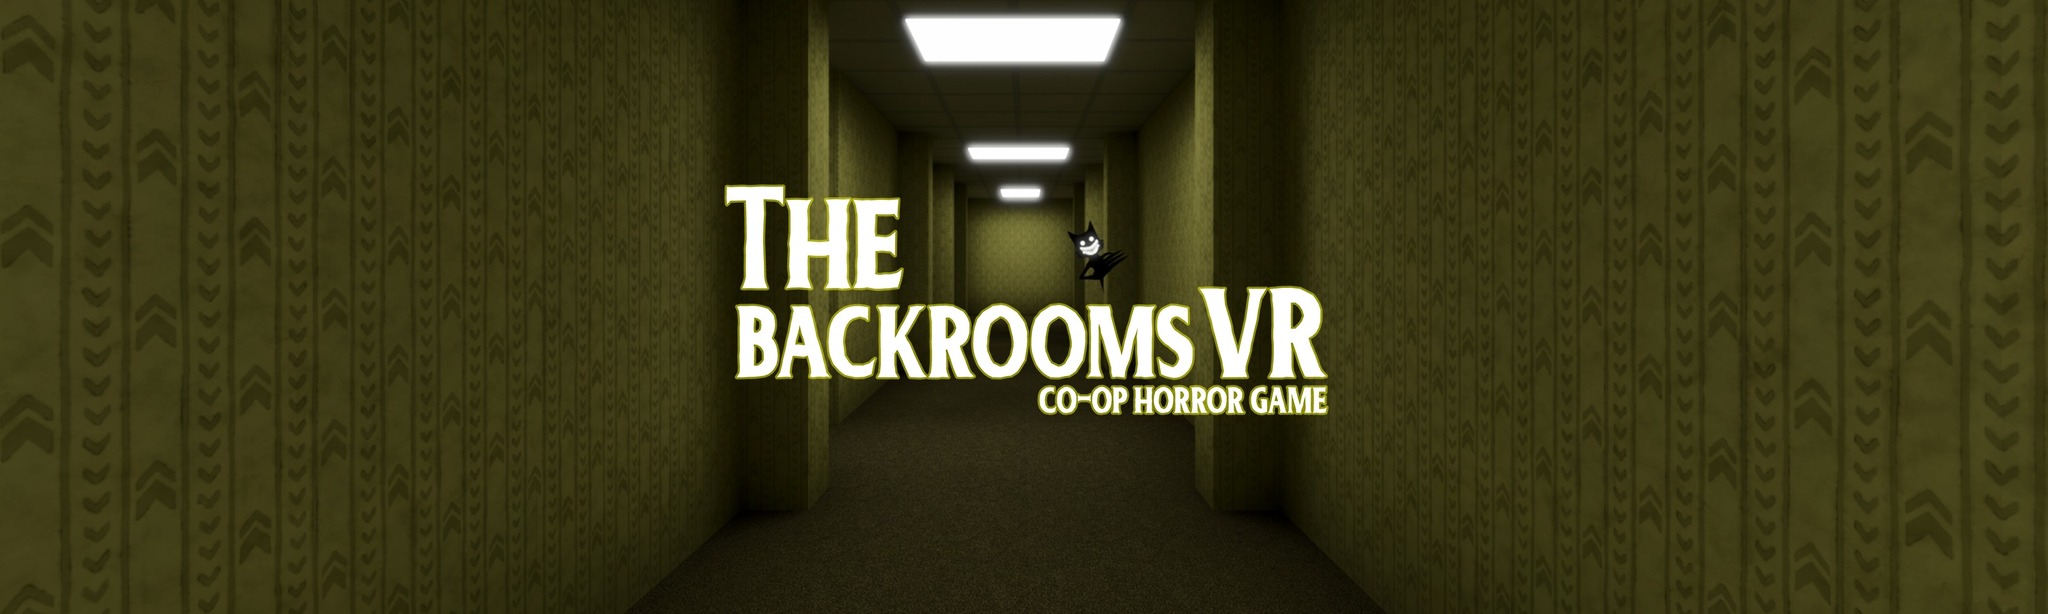 BACKROOMS 2: SURVIVAL jogo online gratuito em